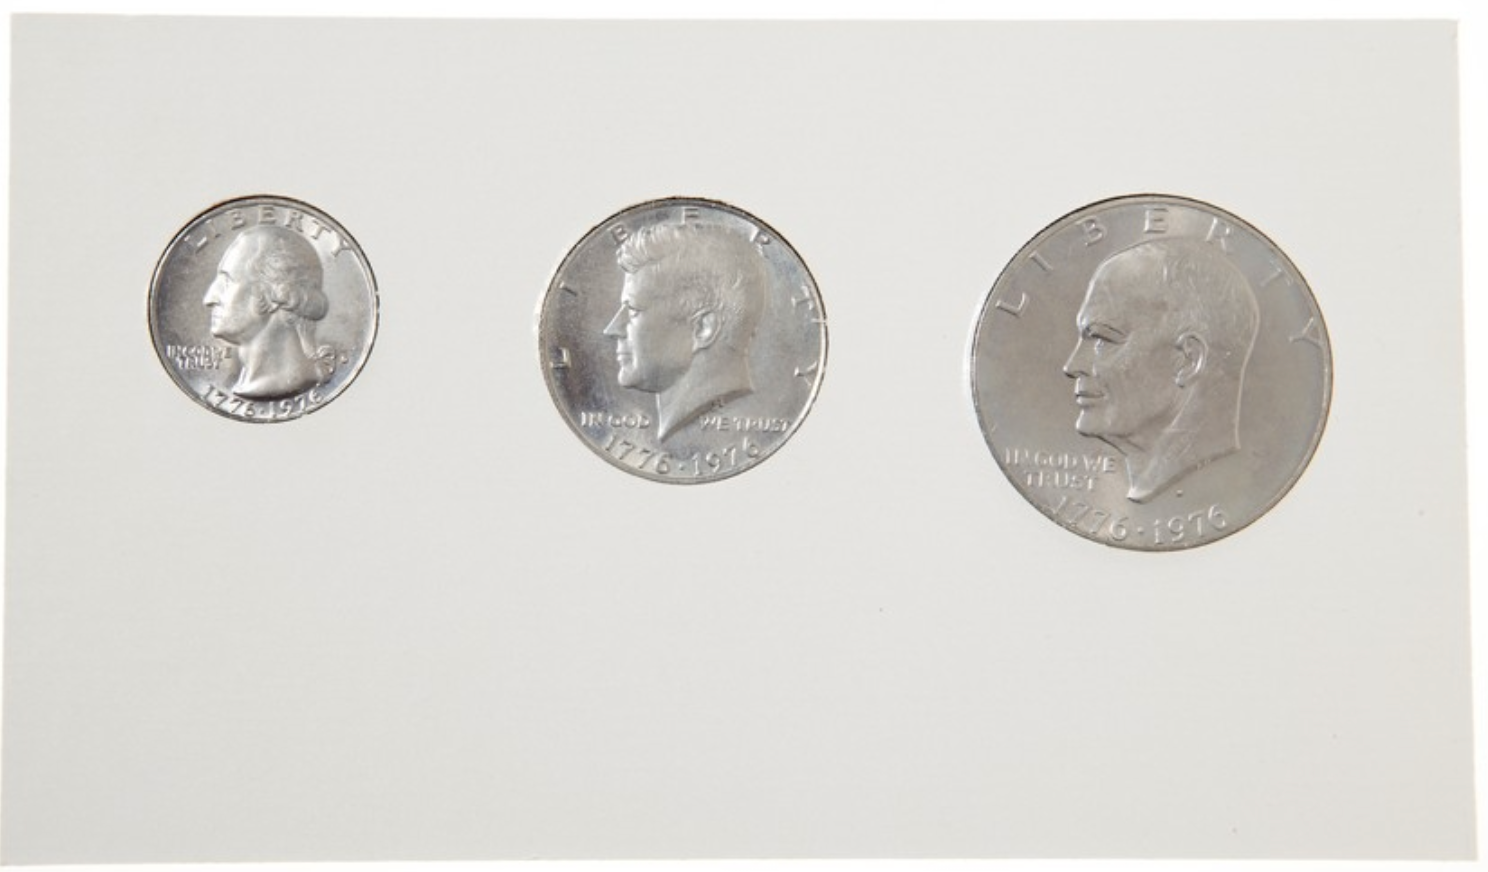 USA 3 Coin set 1976 BICENTENNIAL COINAGE 1776-1976